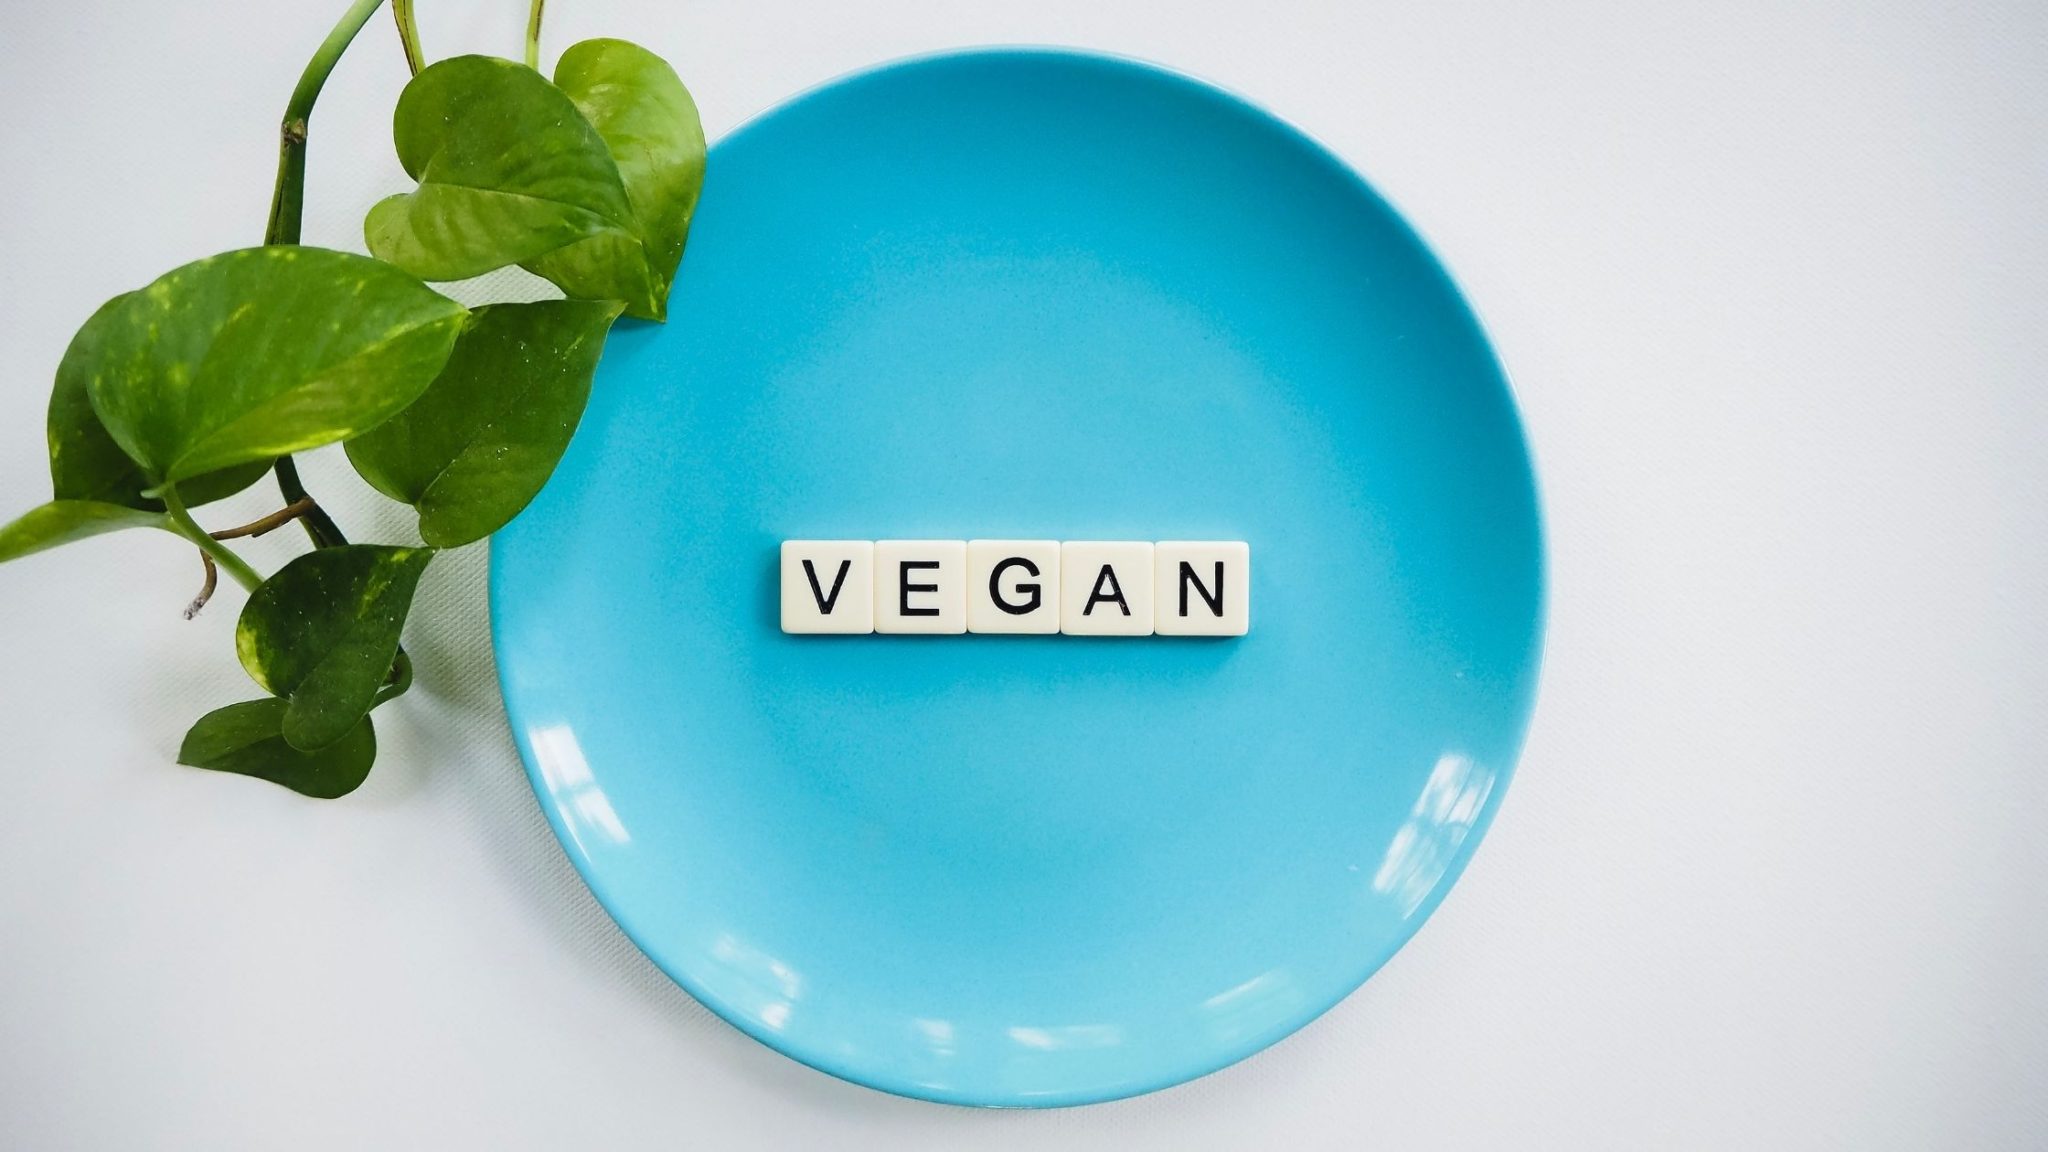 Vegan word scrabble on blue plate